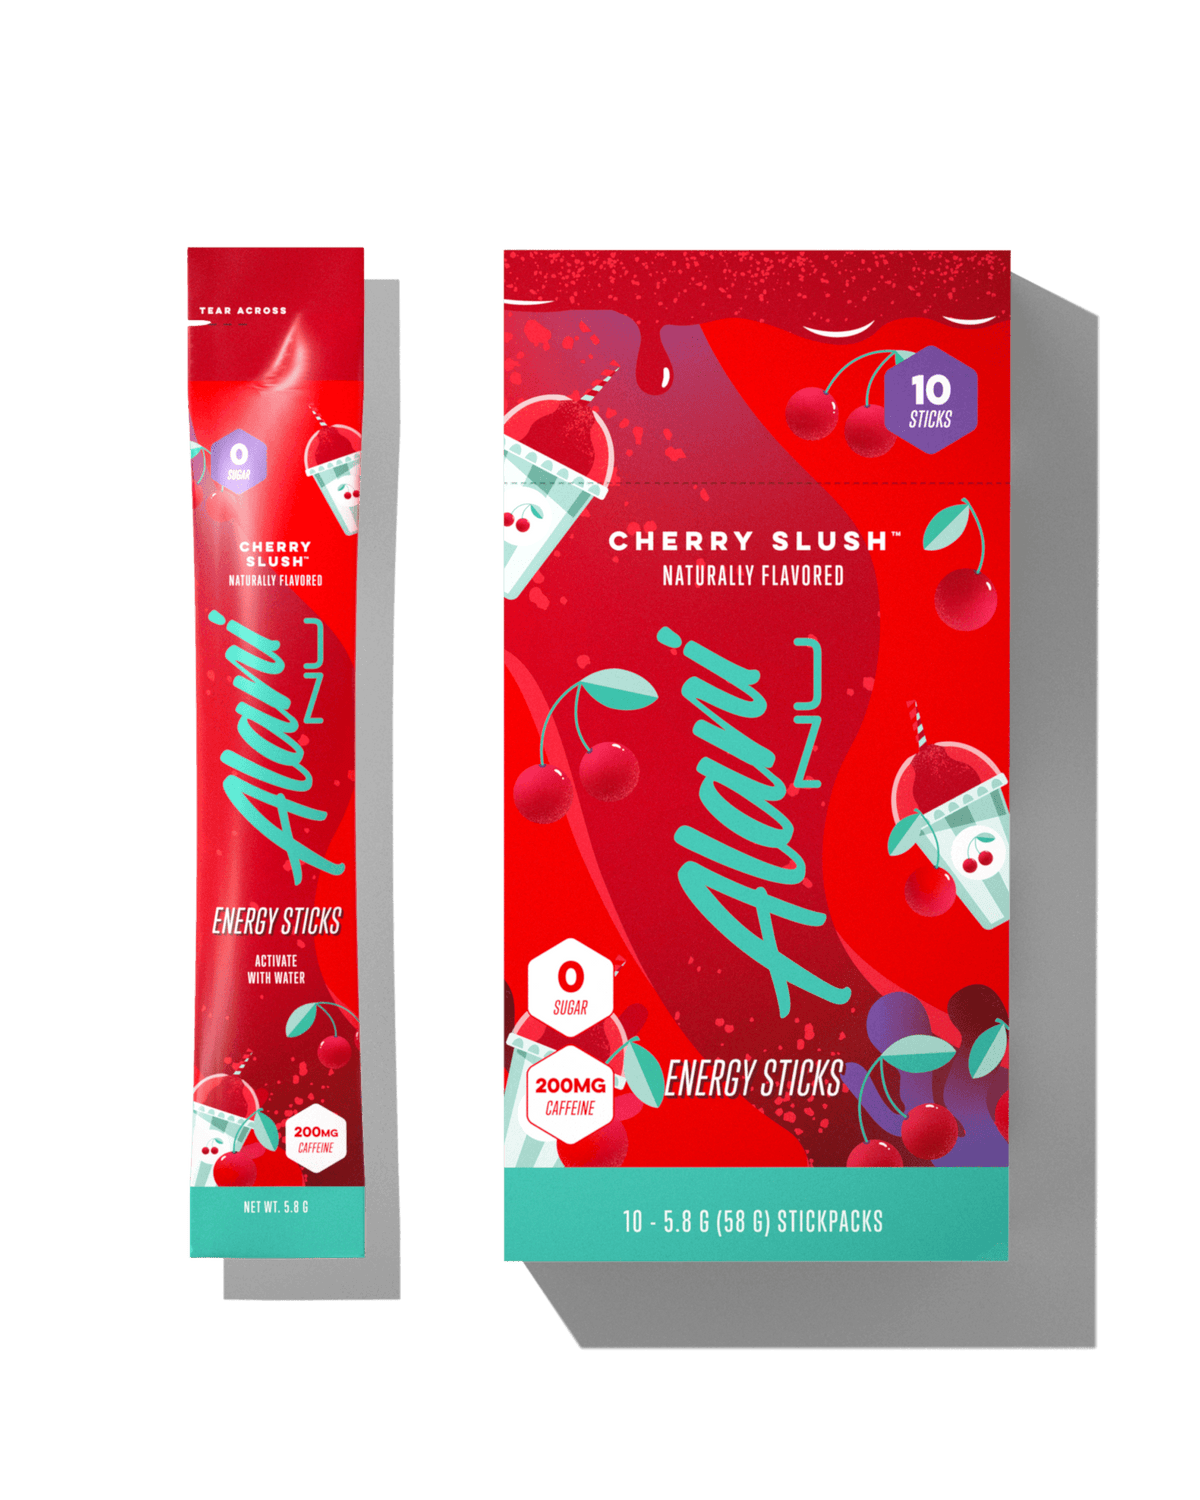 A 10pk of Energy Sticks in Cherry Slush flavor.